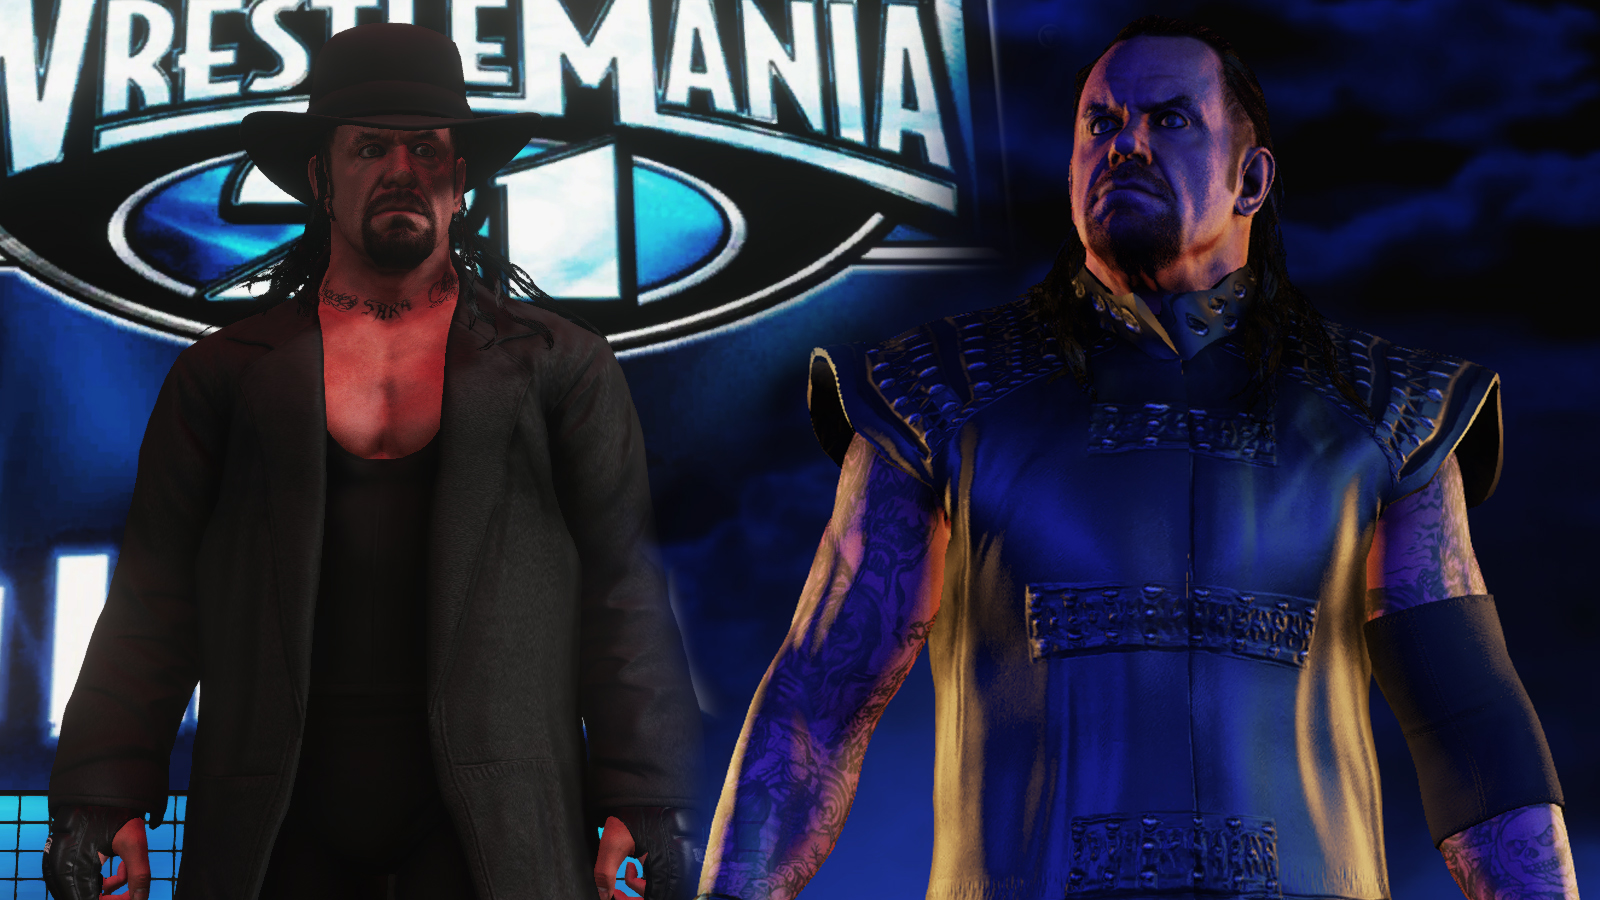 undertaker wrestlemania 20